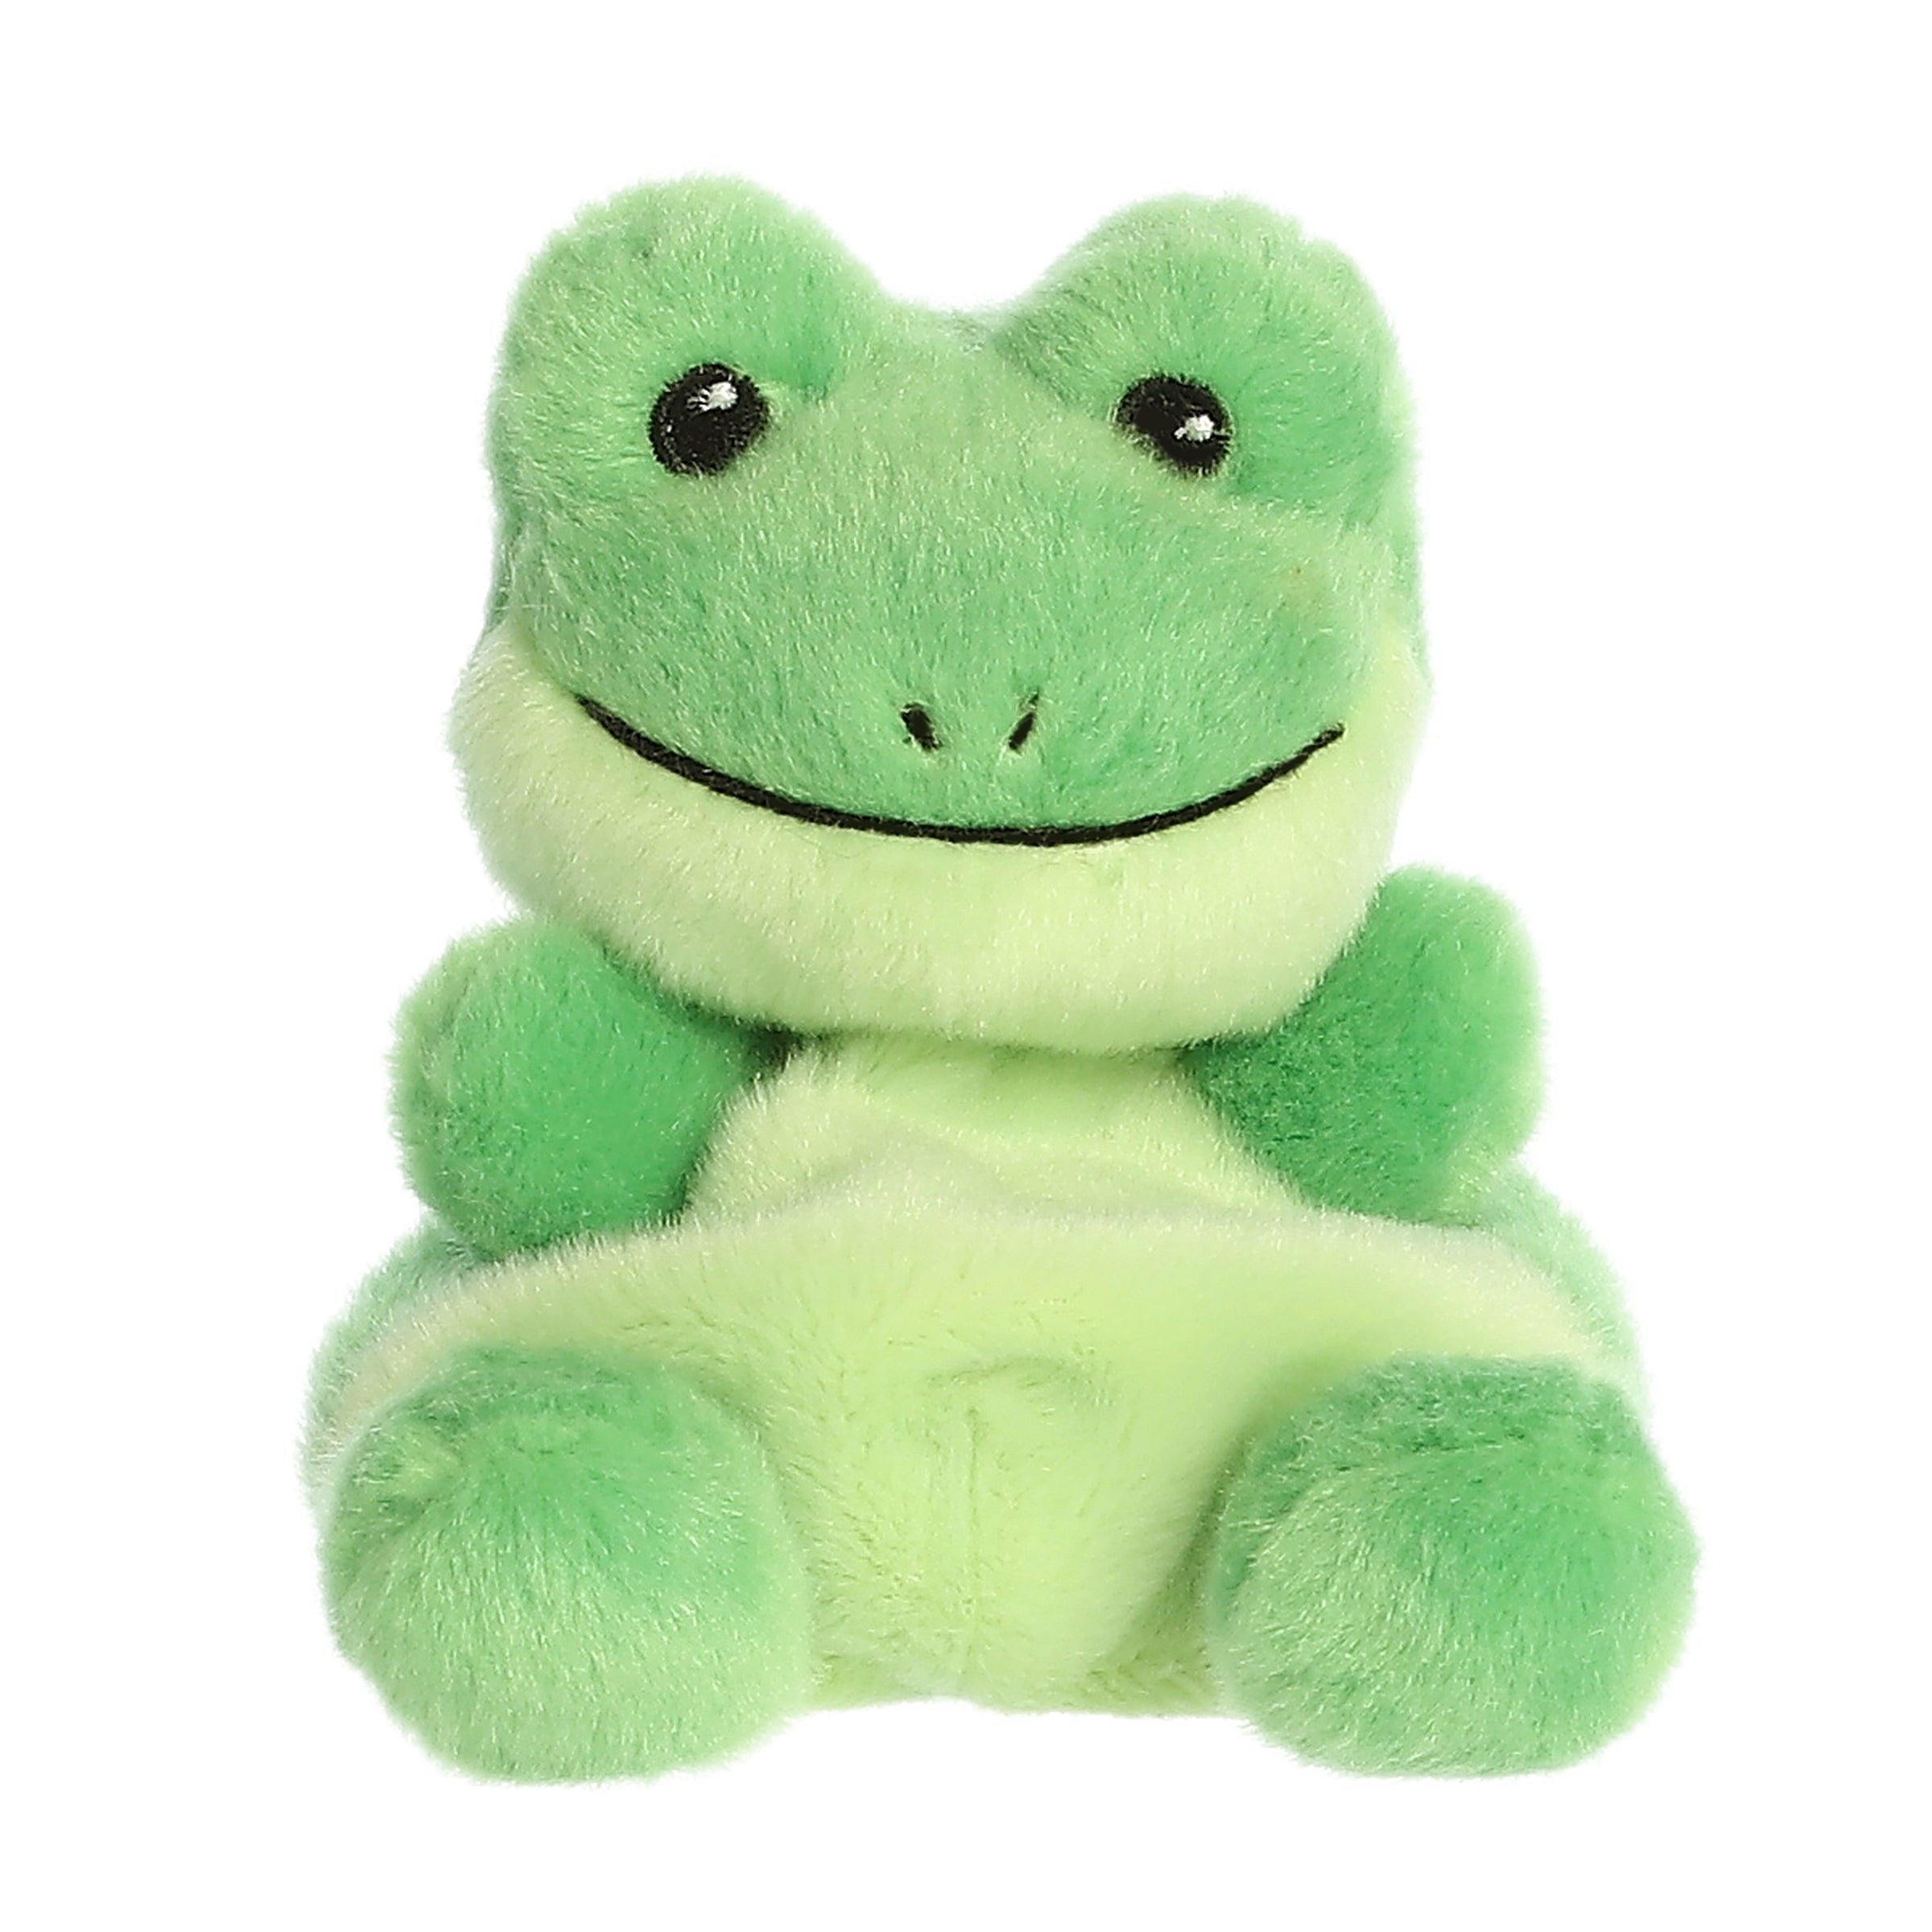 Frog Stuffed Animal, Aurora, Fluffy, Soft, Green and White, Sitting Frog